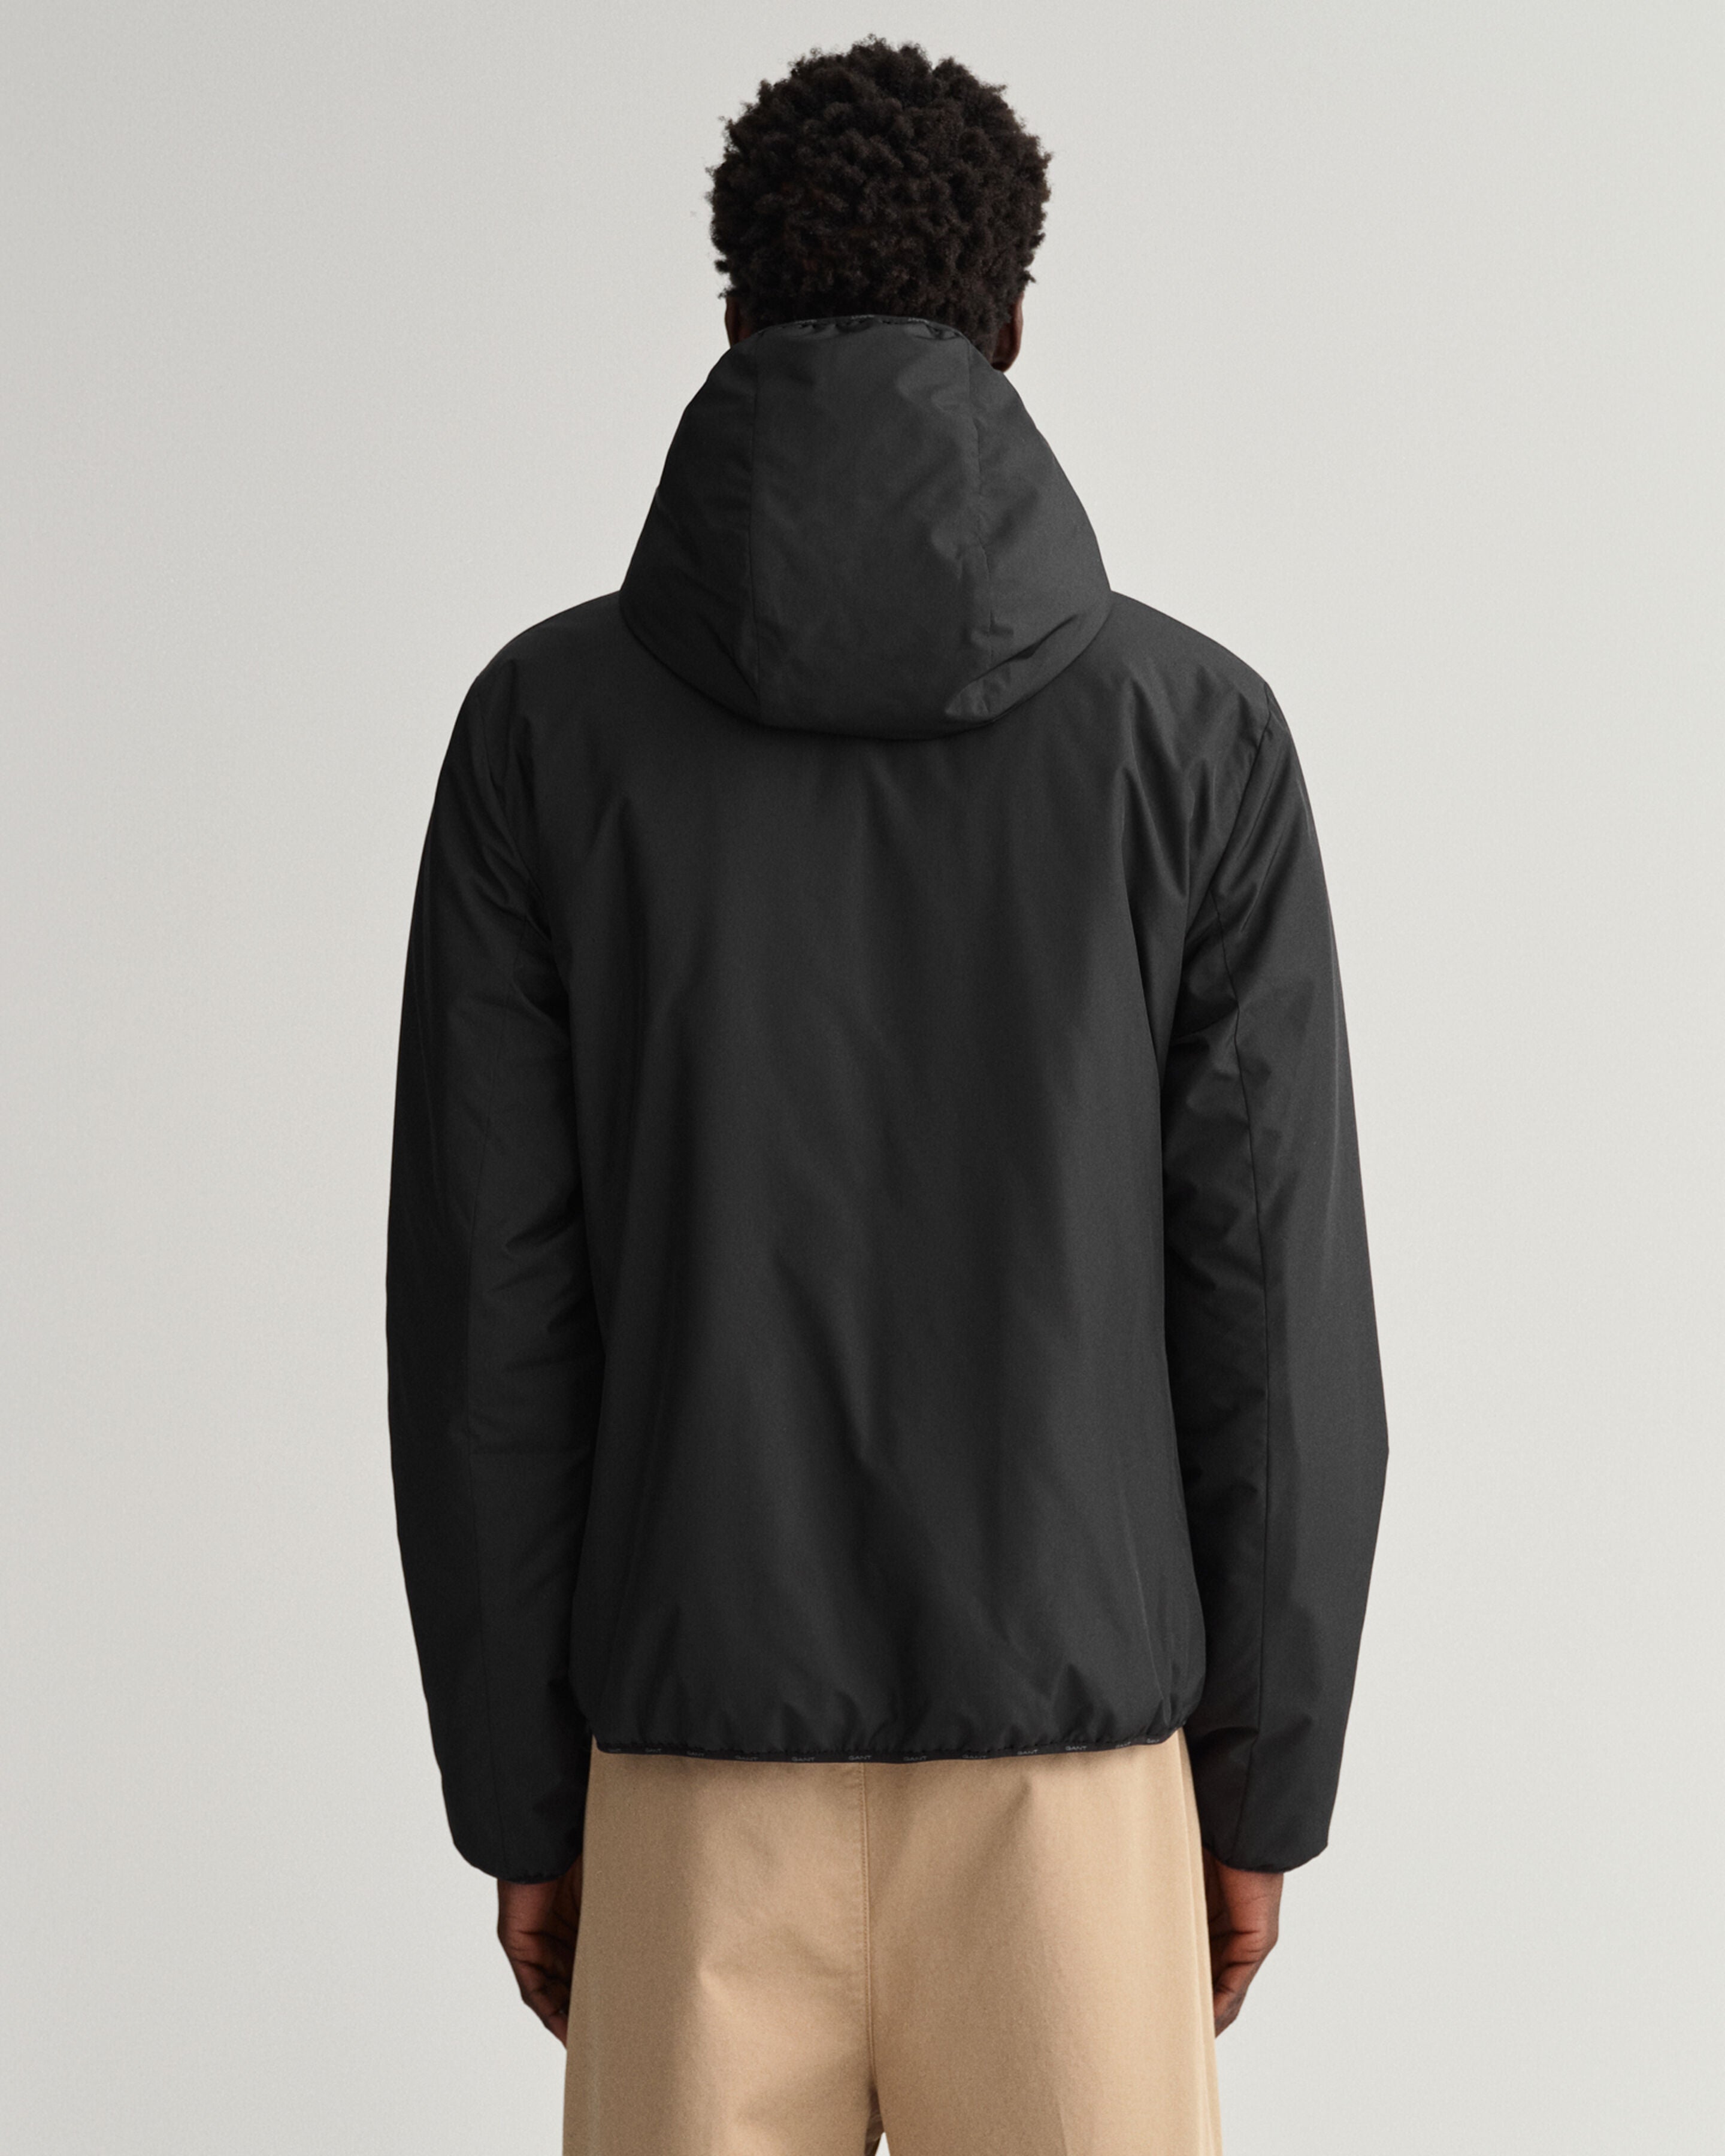 GANT - Reversible Hooded Jacket in Ebony Black 7006242 19